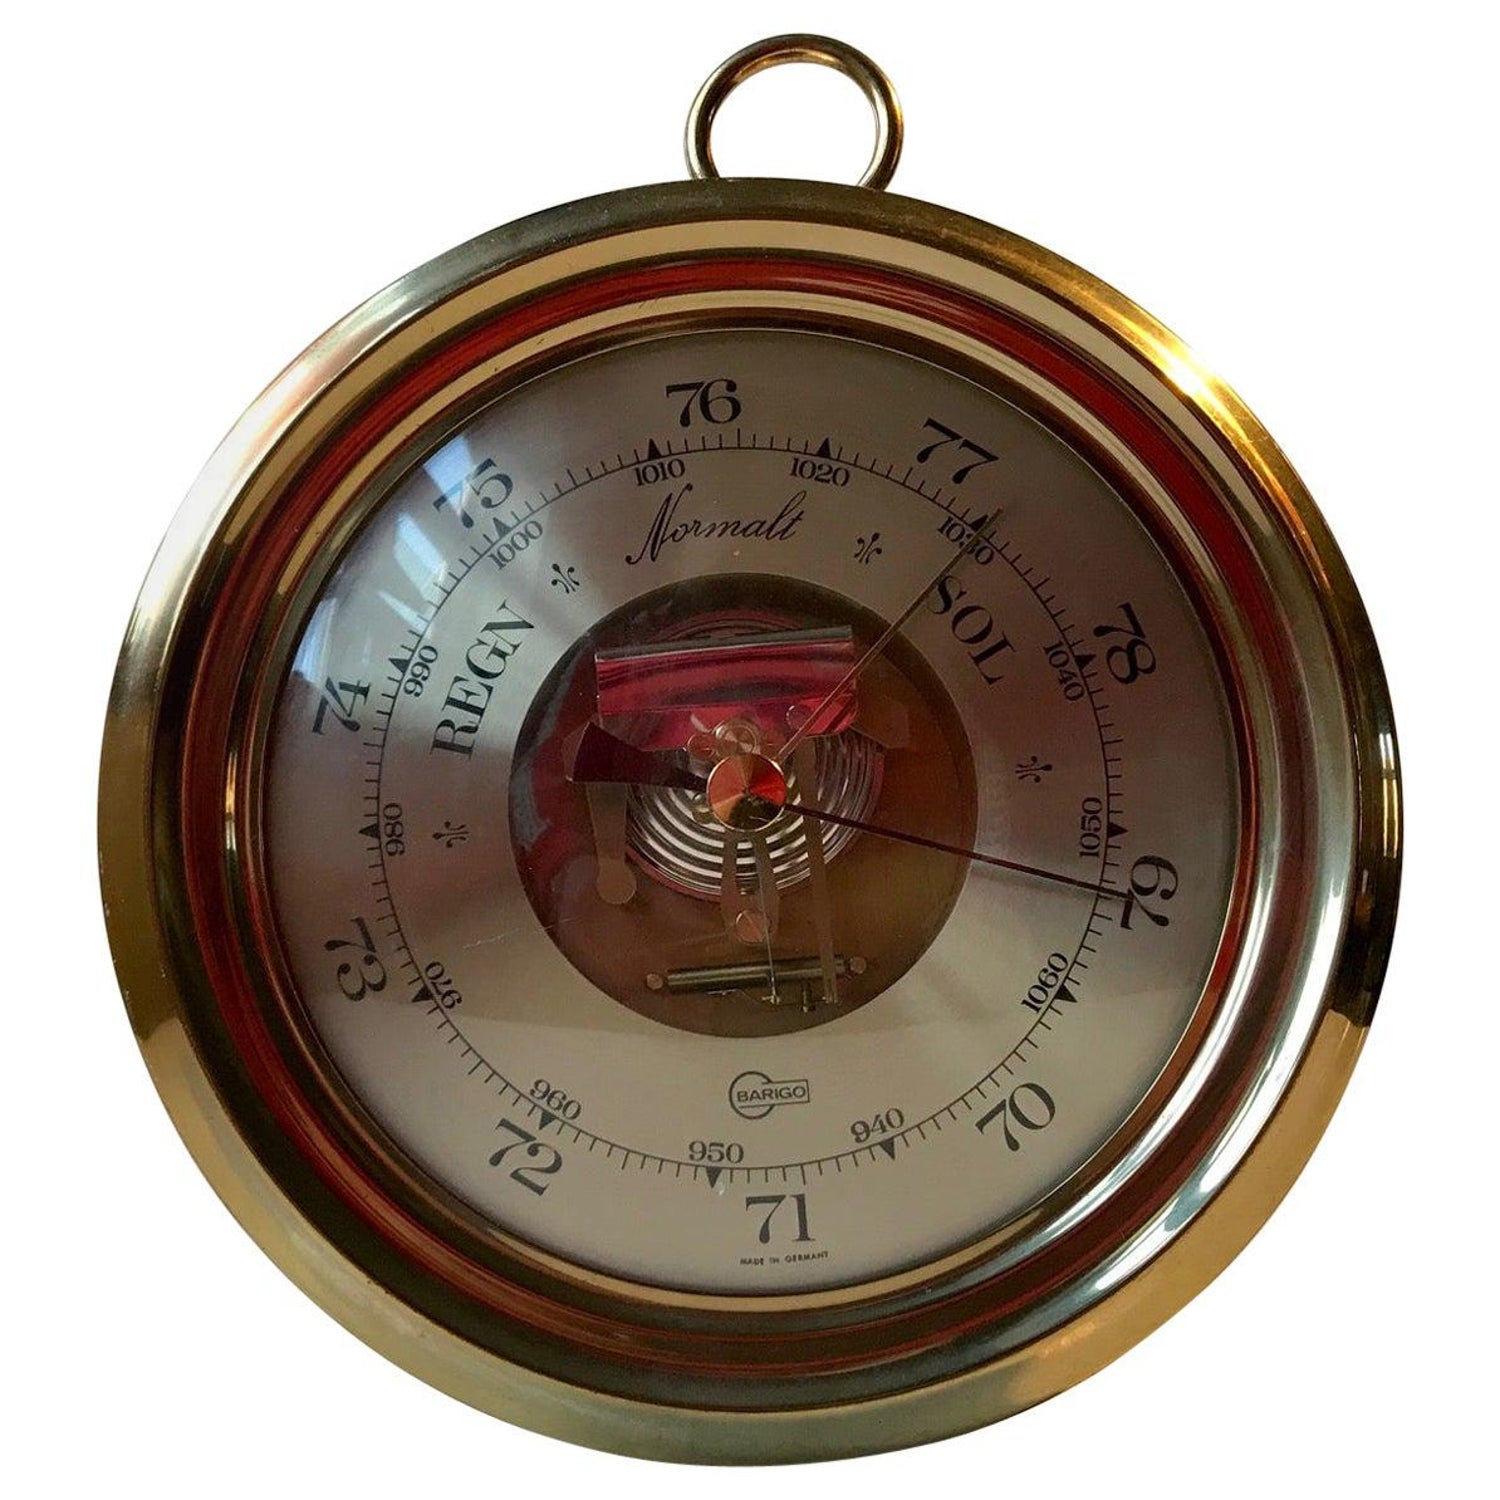 https://a.1stdibscdn.com/wall-mounted-vintage-barometer-weather-station-in-brass-barigo-germany-for-sale/1121189/f_243027521624693699106/24302752_master.jpg?width=1500